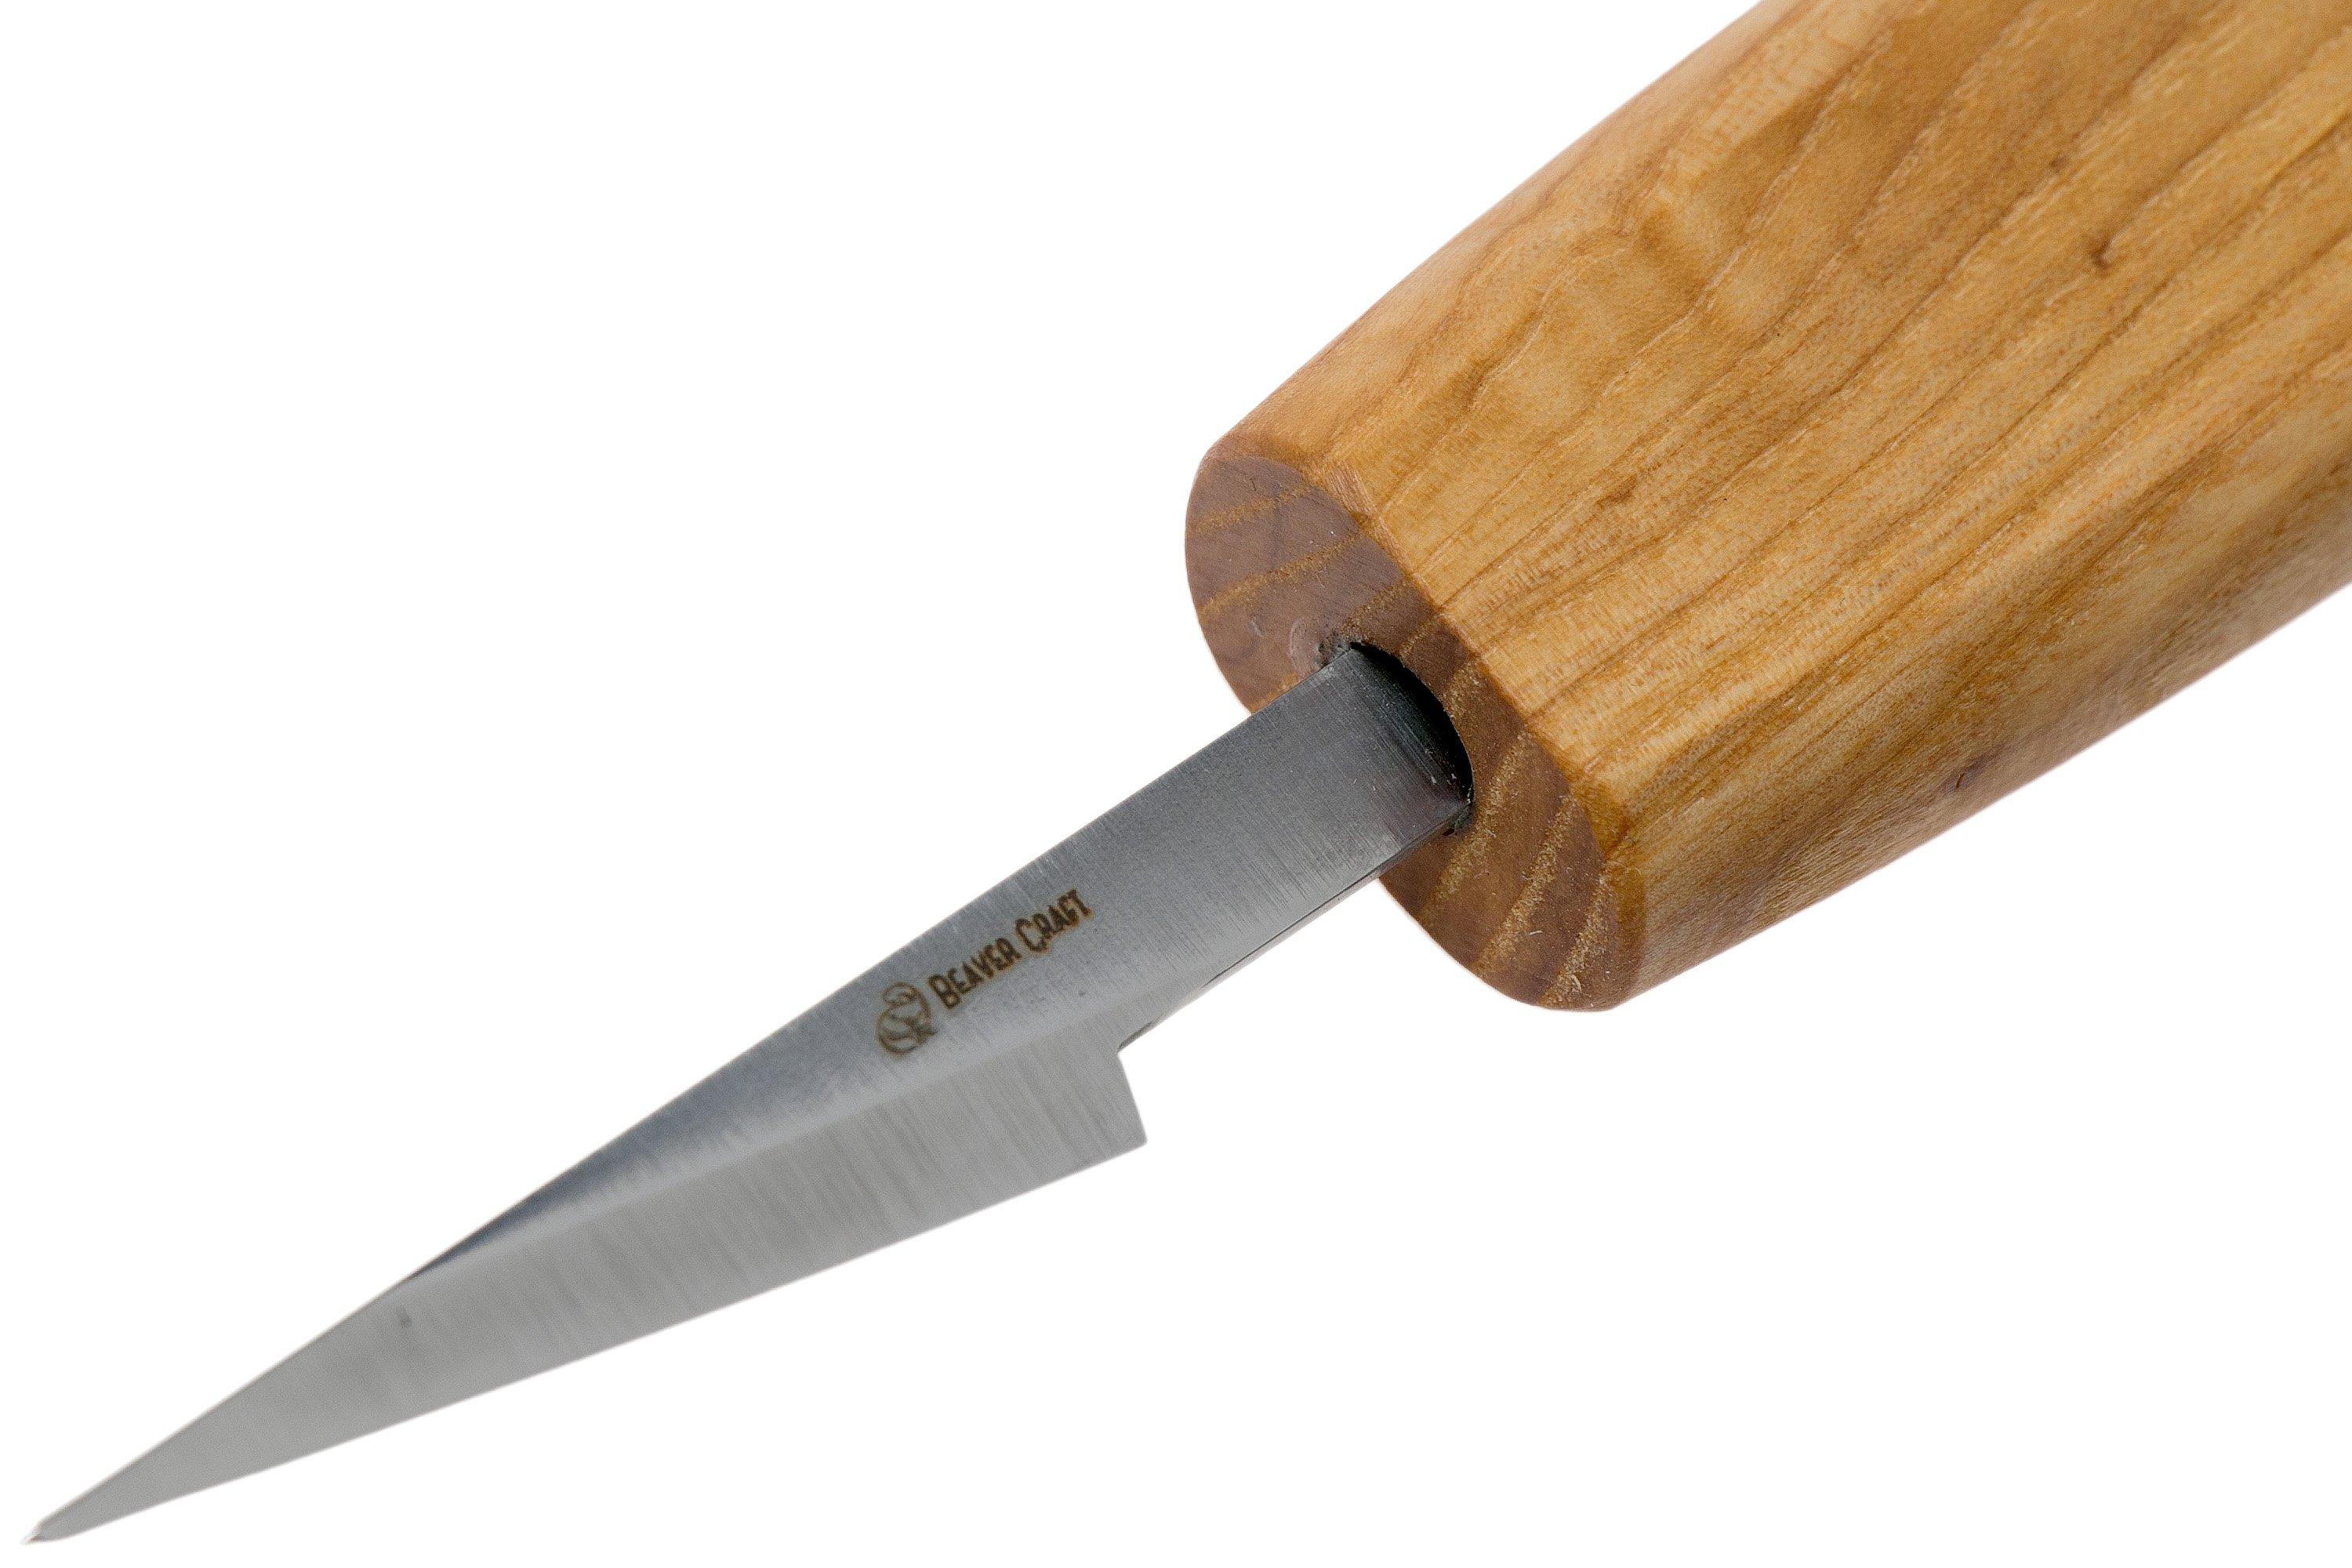 BeaverCraft Cincel de gubia para tallar madera 7L/22 cuchillo de gancho  SK1s cuchillo de dibujo con funda de cuero herramienta para carpintería  DK2s